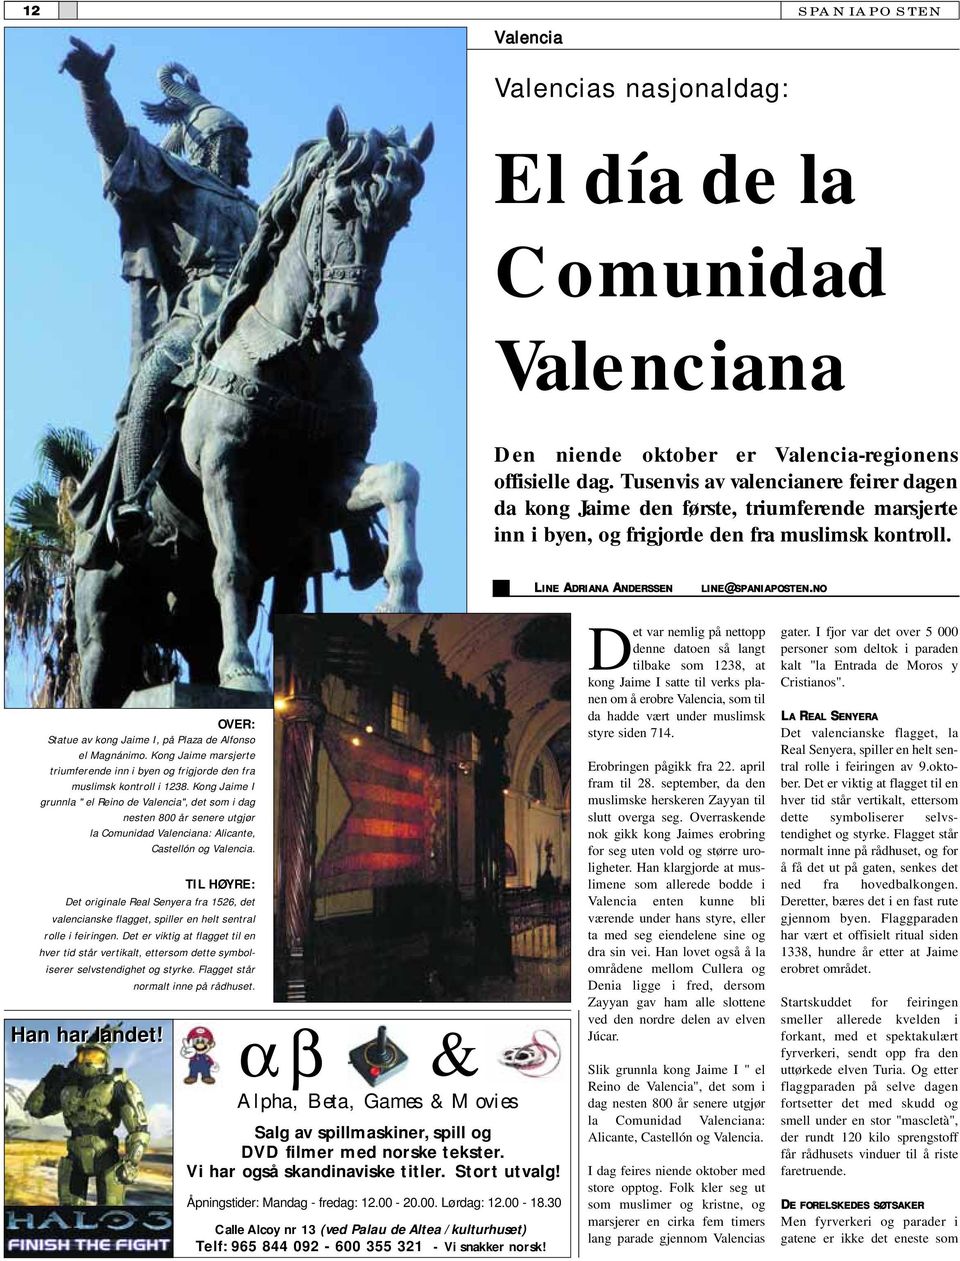 NO OVER: Statue av kong Jaime I, på Plaza de Alfonso el Magnánimo. Kong Jaime marsjerte triumferende inn i byen og frigjorde den fra muslimsk kontroll i 1238.